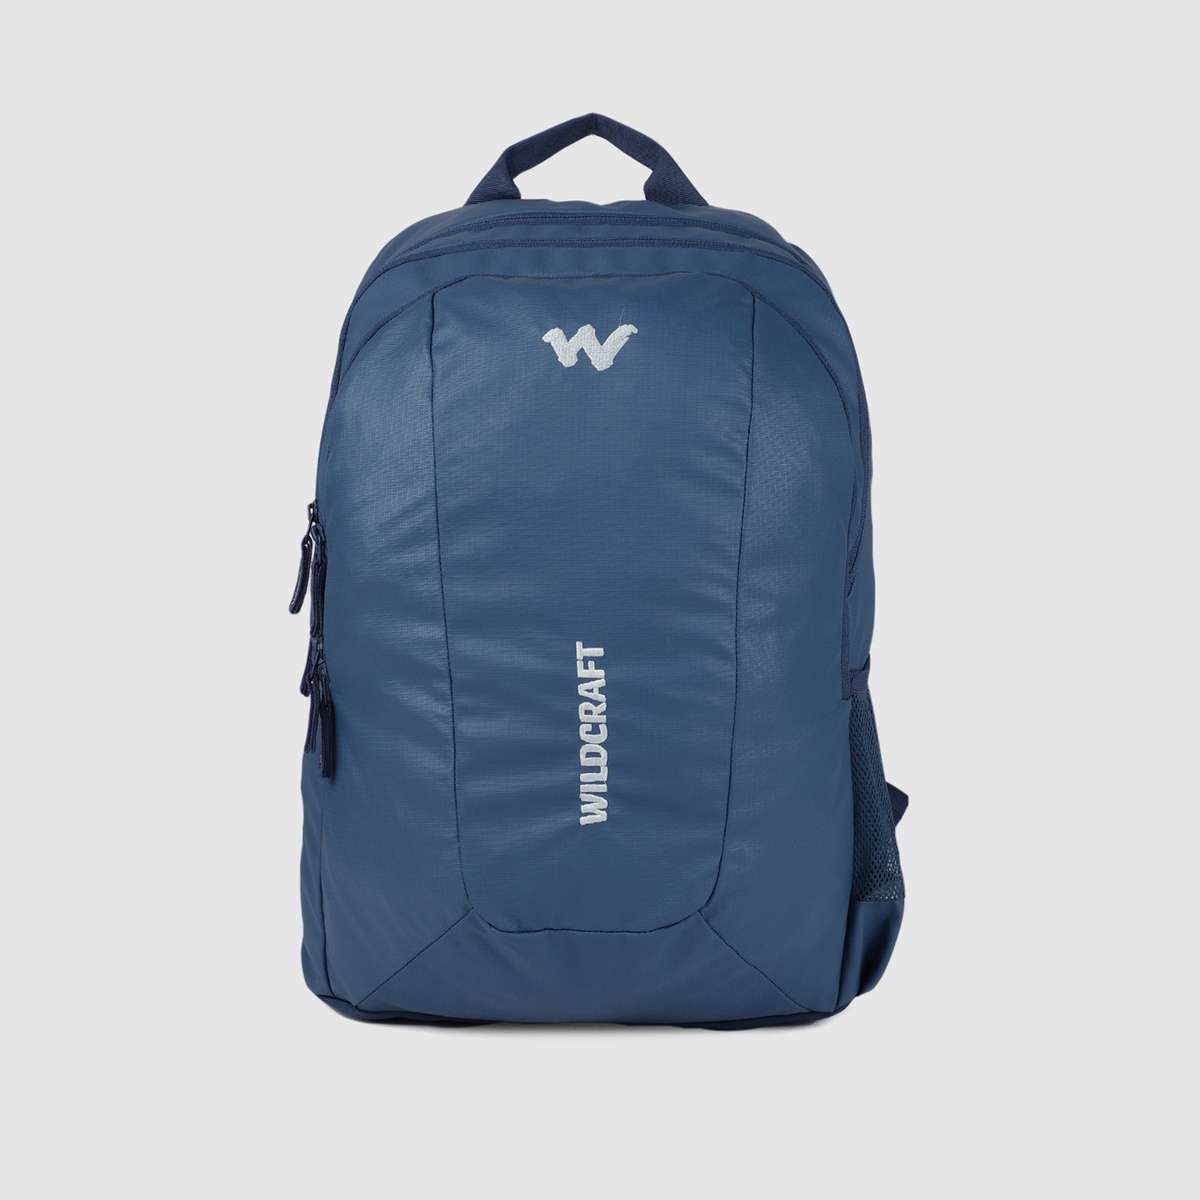 Buy TorQ 1 Wildcraft Personalized Backpacks Online